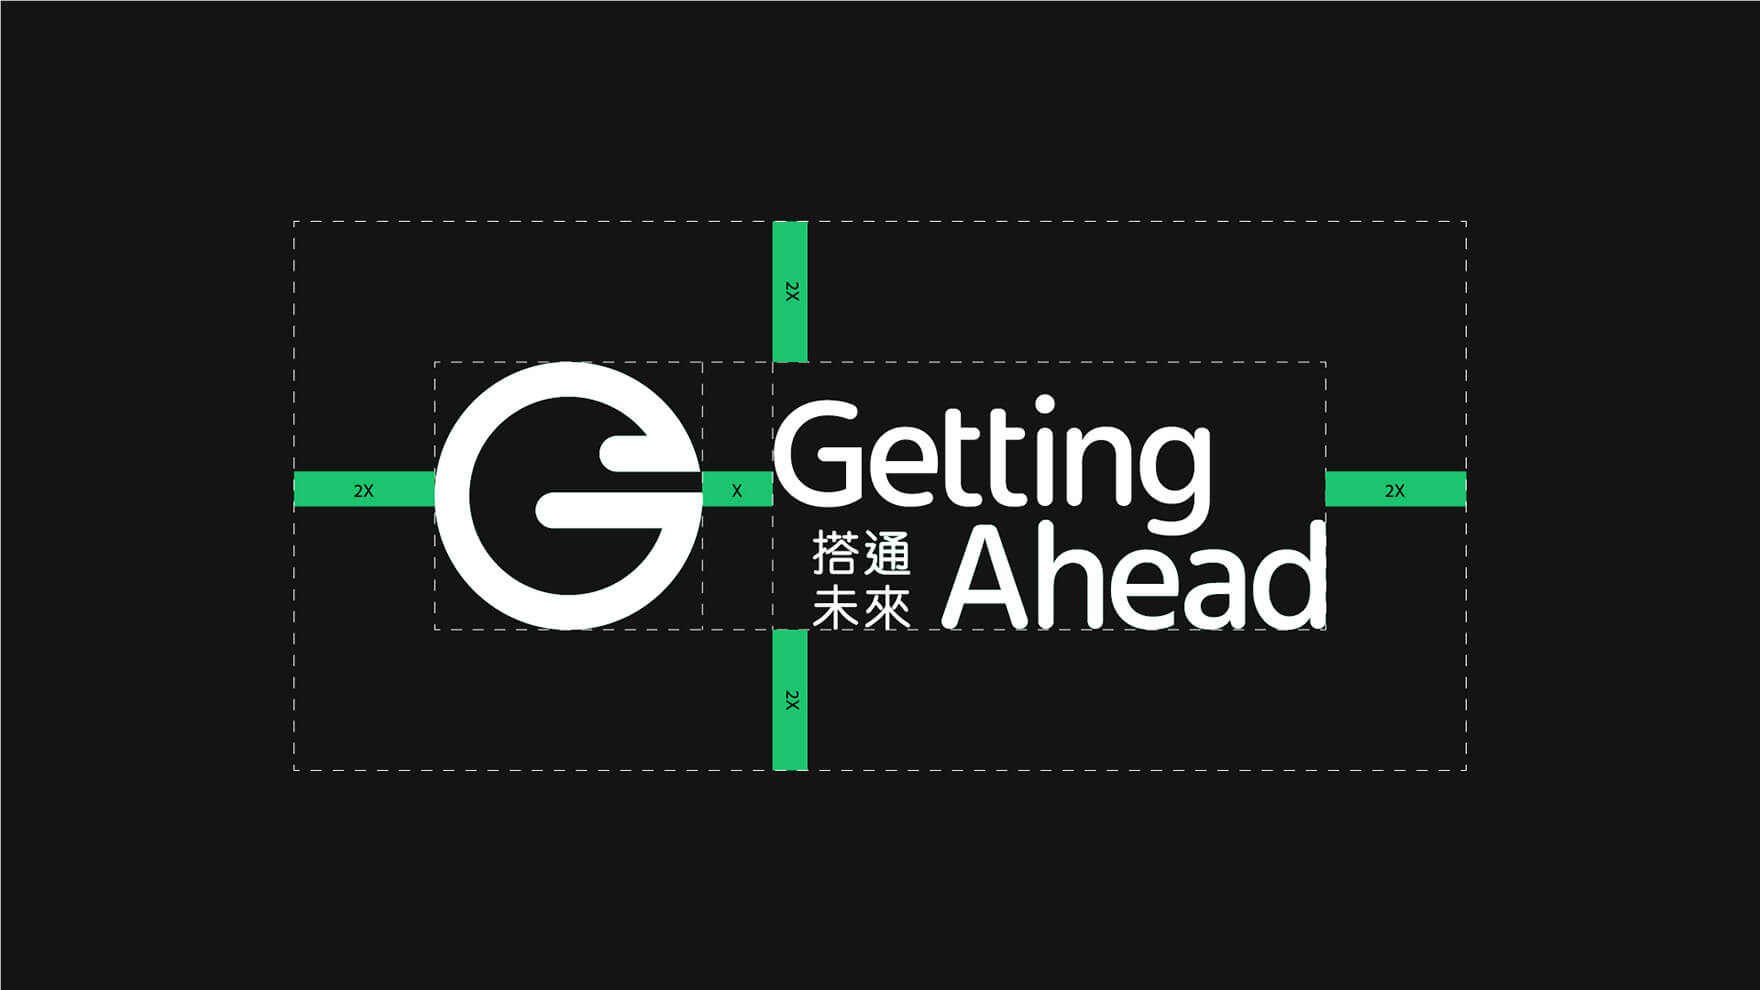 Branding Agency Hong Kong_GettingAhead_NGO Branding_CheddarMedia-08_1760